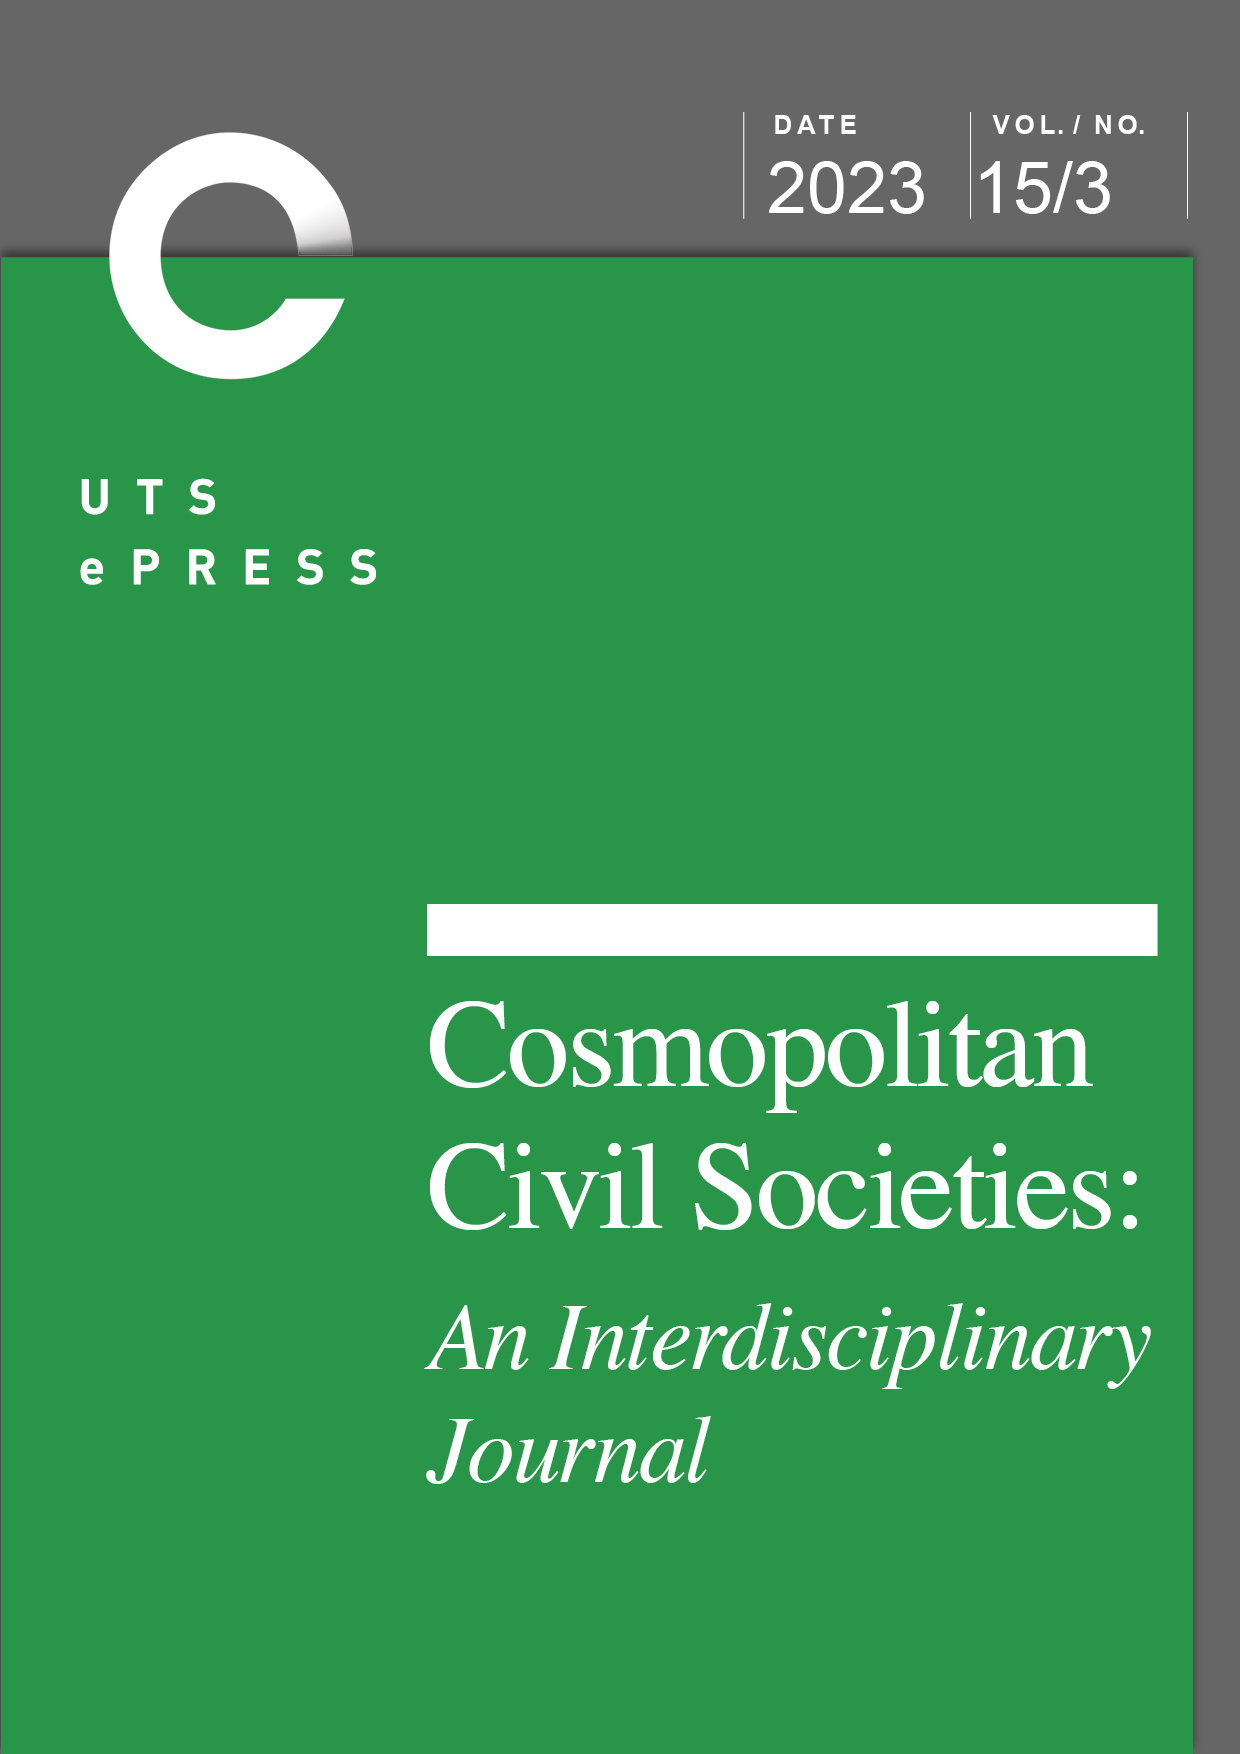 Cosmopolitan Civil Societies Journal cover Vol 15 No 2 2023